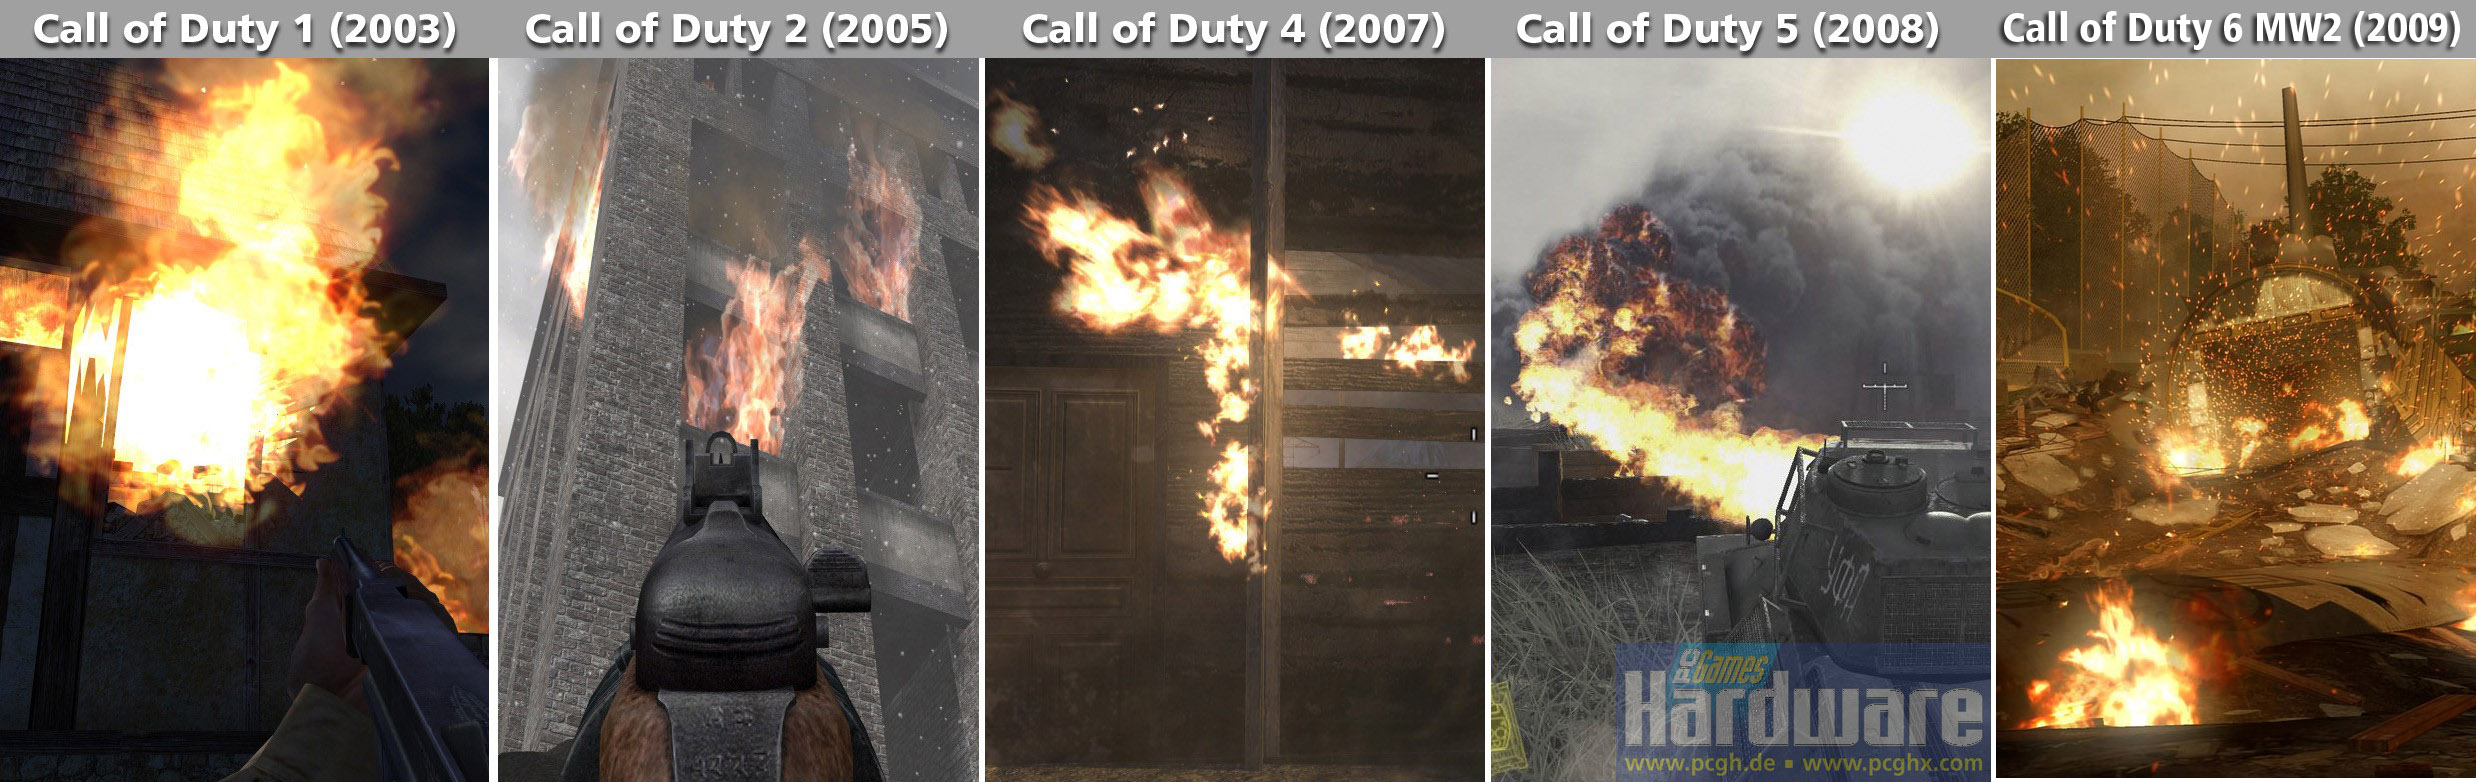 Call_of_Duty_History-2.jpg